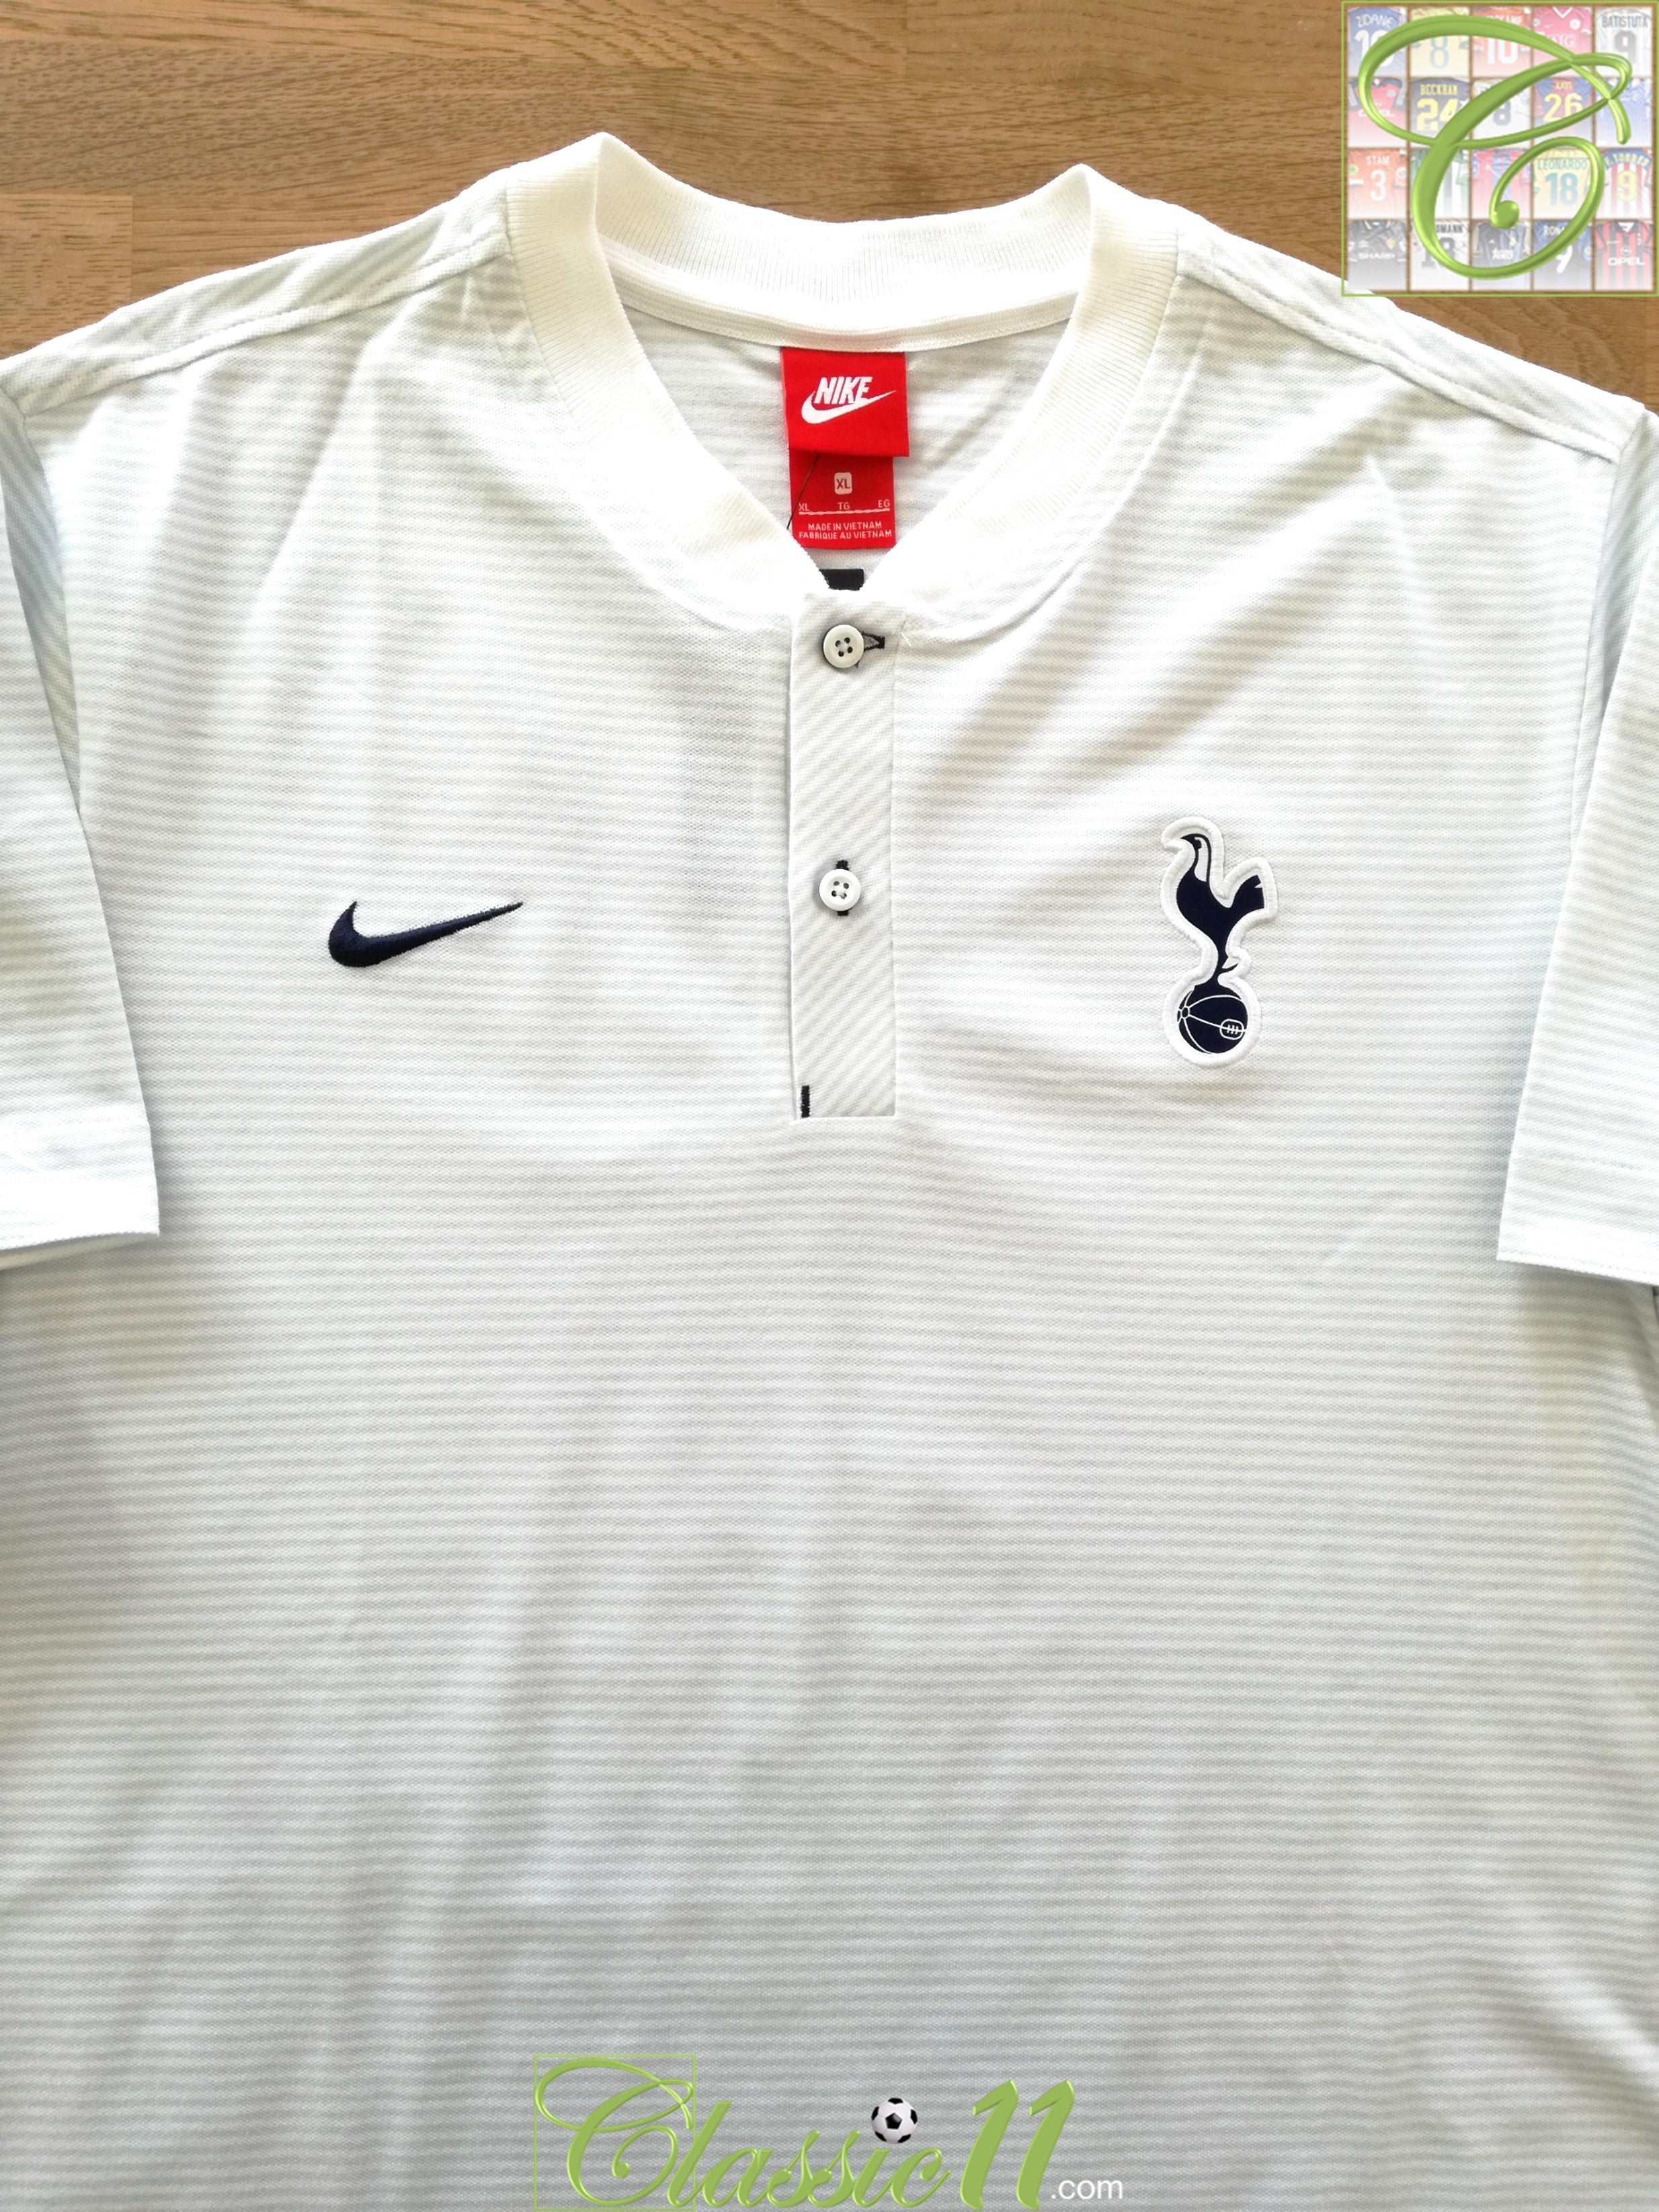 Tottenham Hotspur 2018-19 Startseite Shirt (BNWT) M – Classic